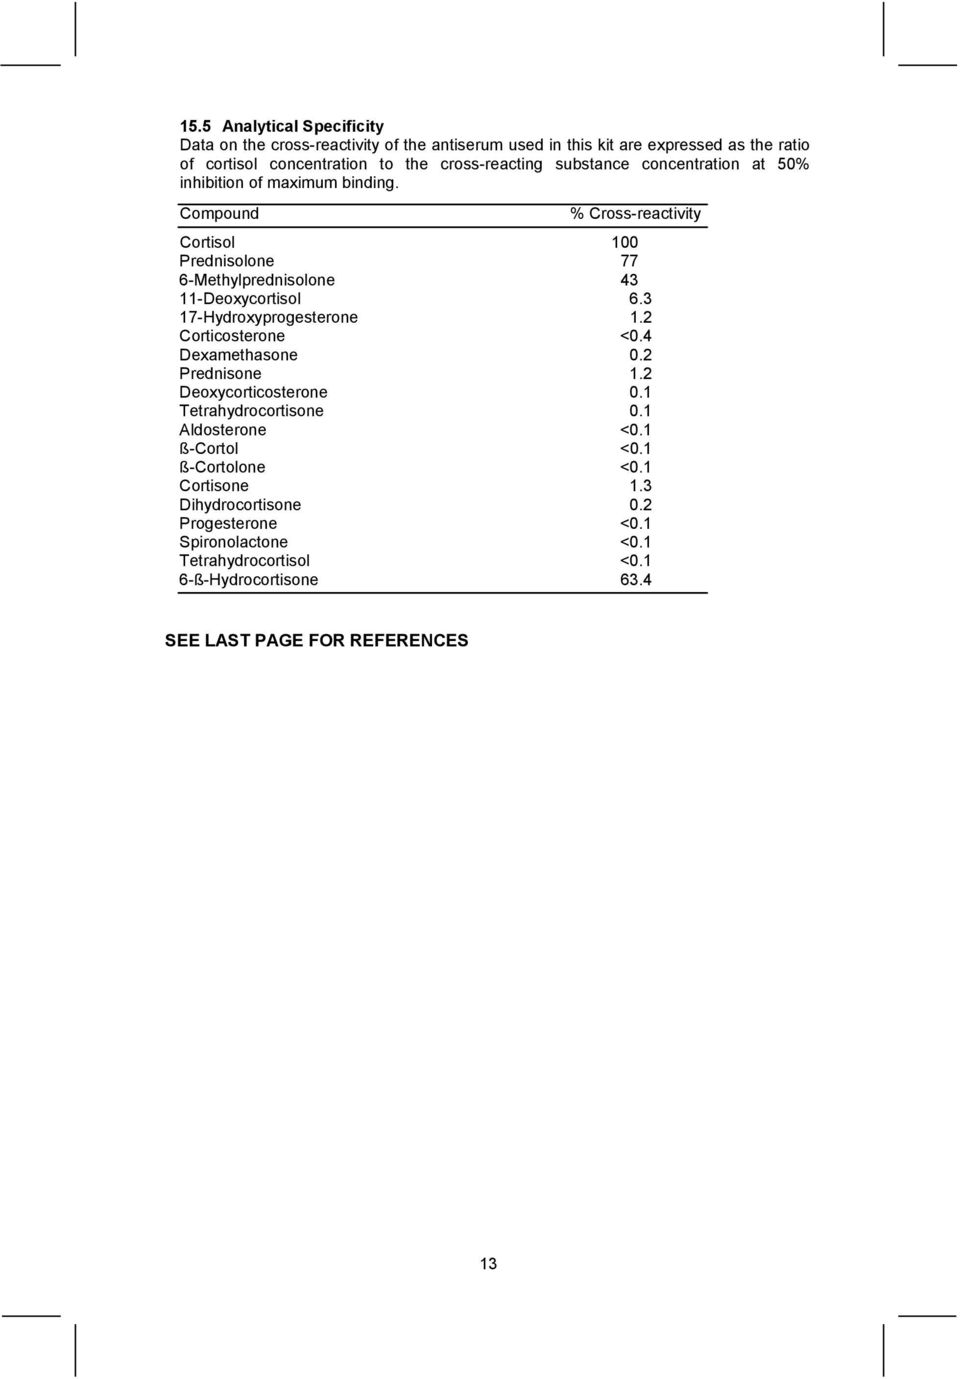 Compound % Cross-reactivity Cortisol 100 Prednisolone 77 6-Methylprednisolone 43 11-Deoxycortisol 6.3 17-Hydroxyprogesterone 1.2 Corticosterone <0.4 Dexamethasone 0.